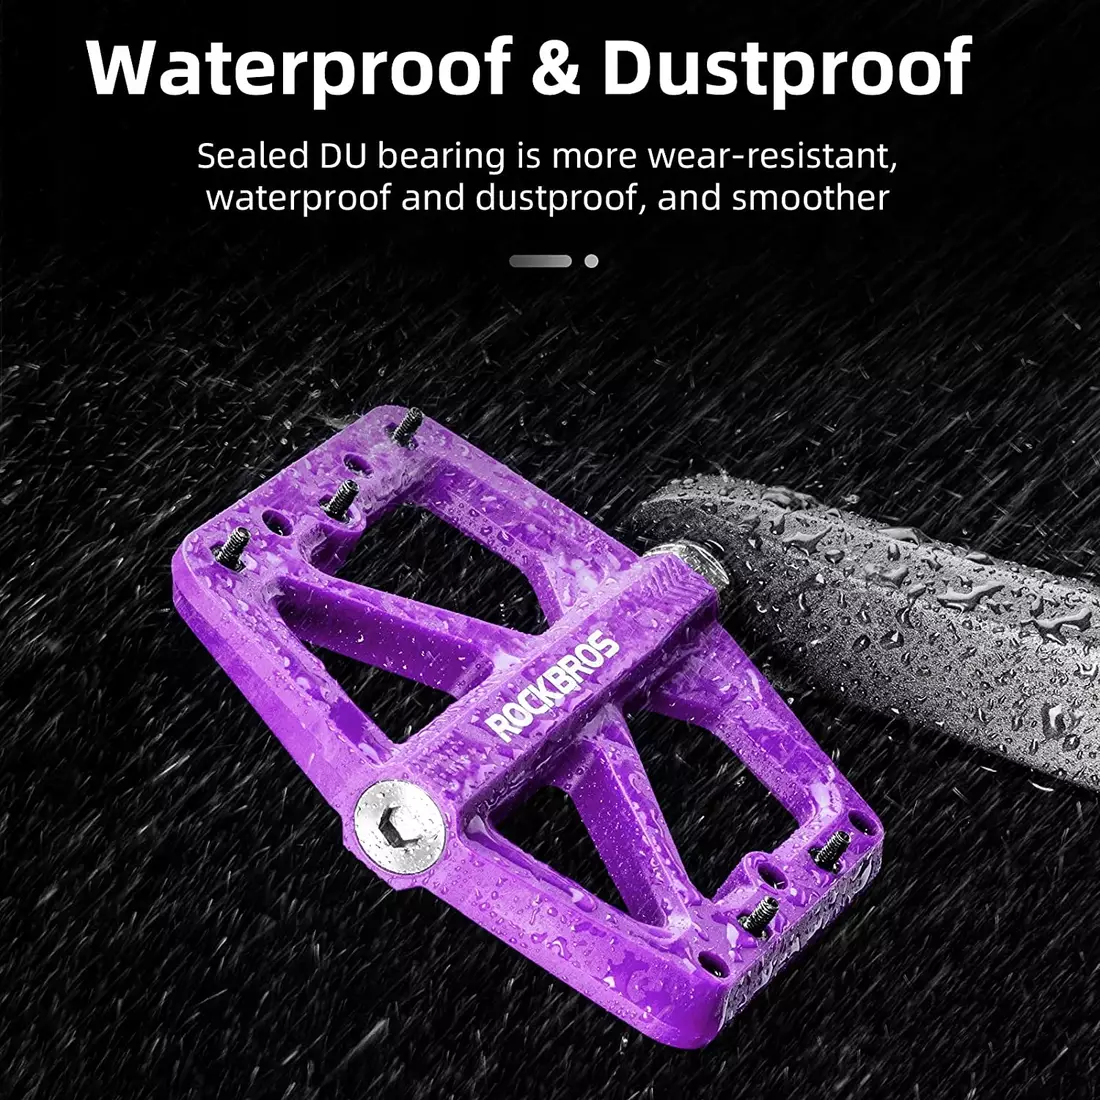 Rockbros pedale platformă nylon violet 2021-12ARD